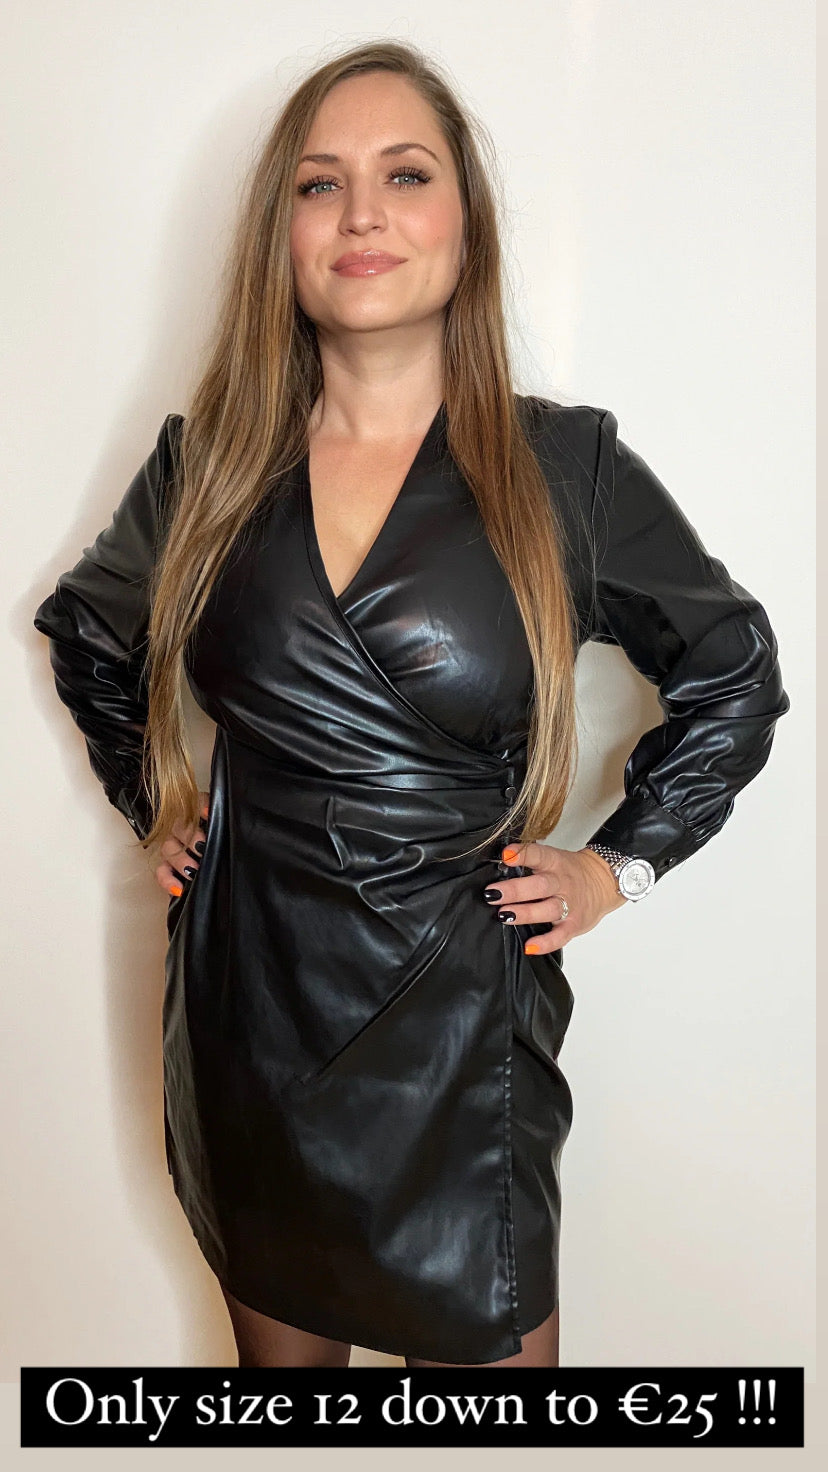 Burrata black leather dress